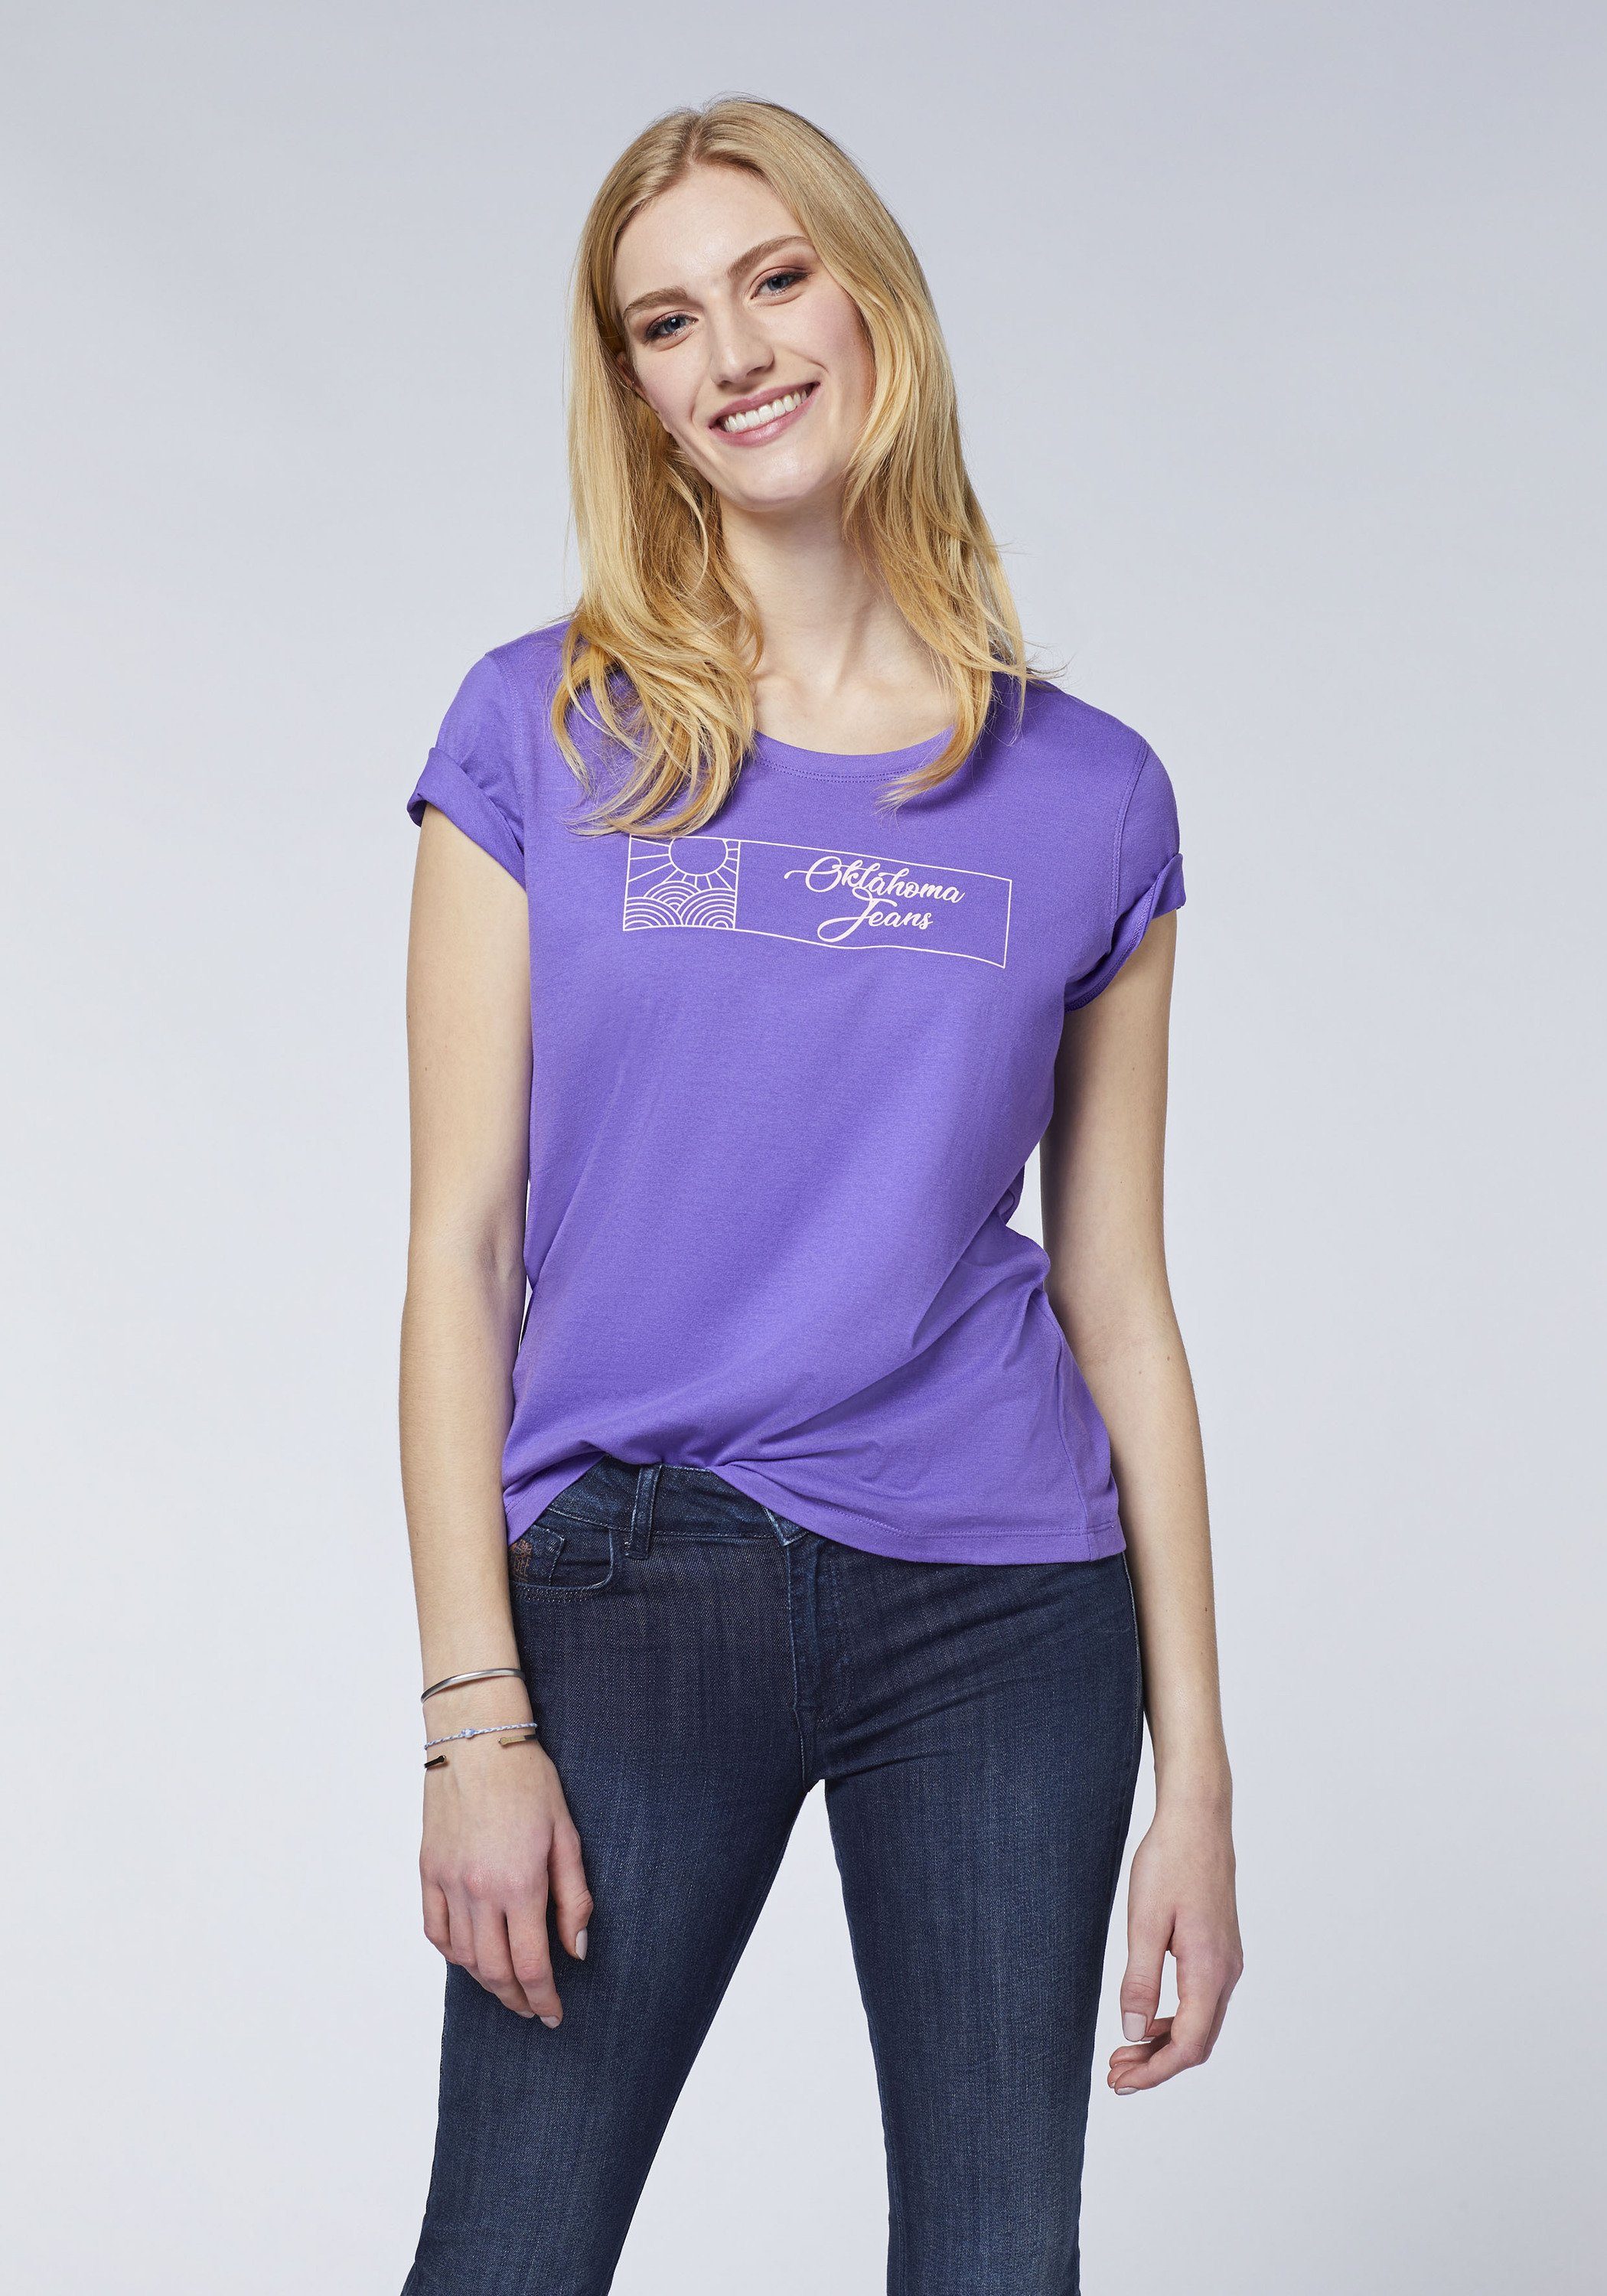 18-3737 Sonnenprint mit und Oklahoma Passion Logo Flower Jeans Print-Shirt